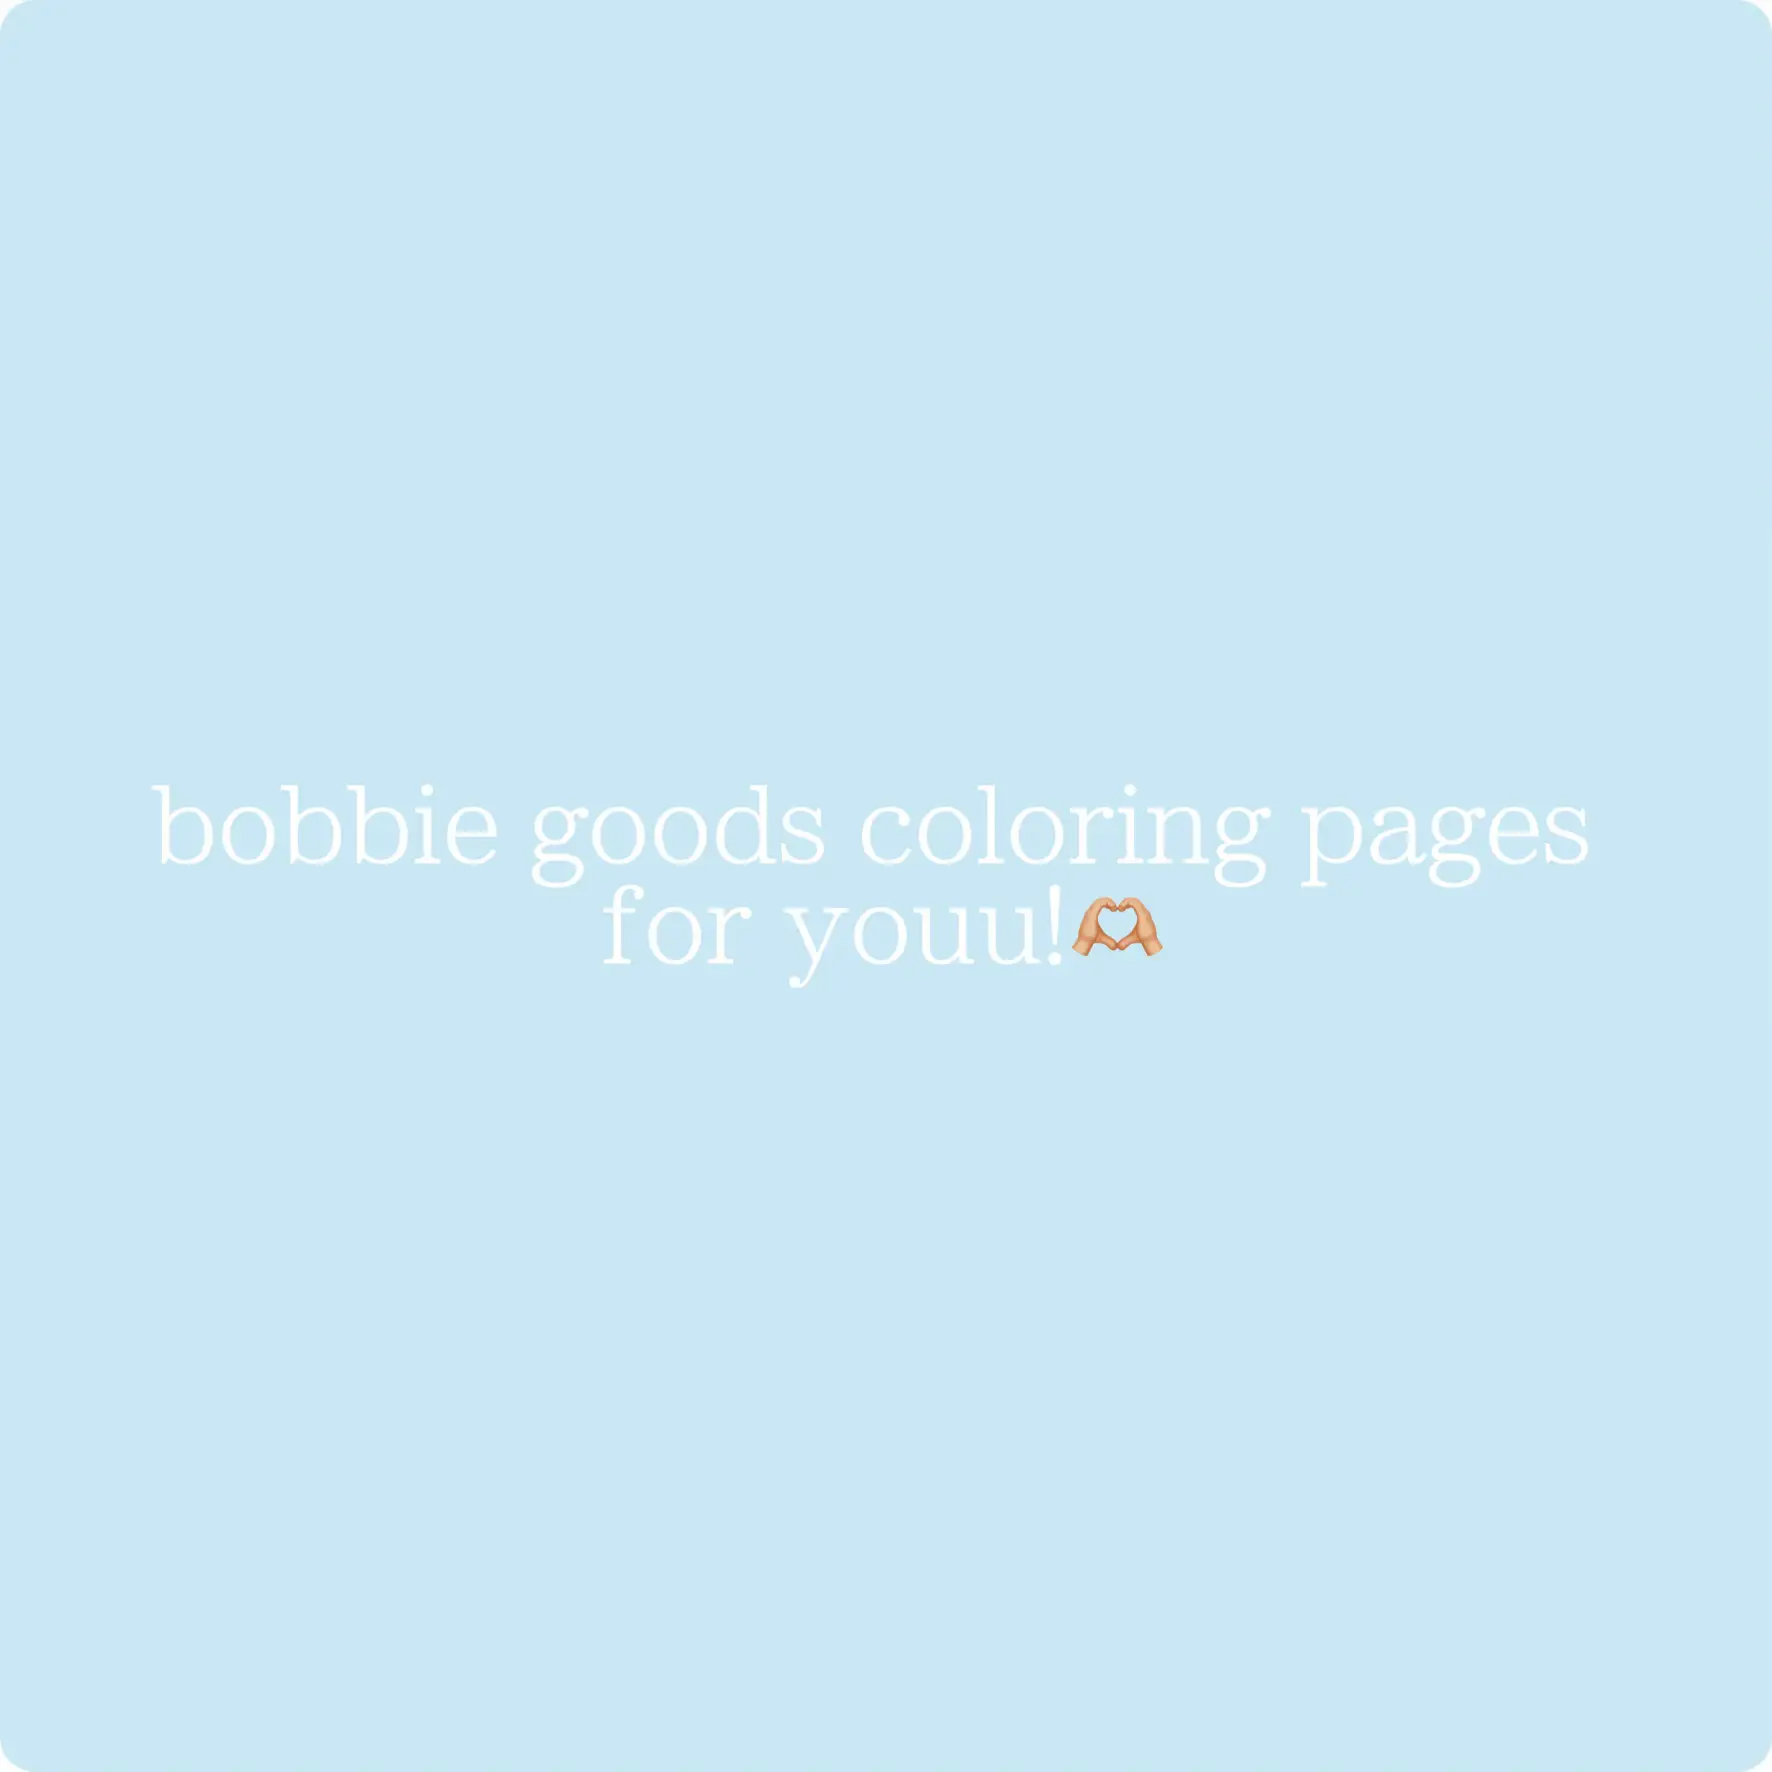 Bobbie Goods Colouring Book Pdf - Lemon8 Search